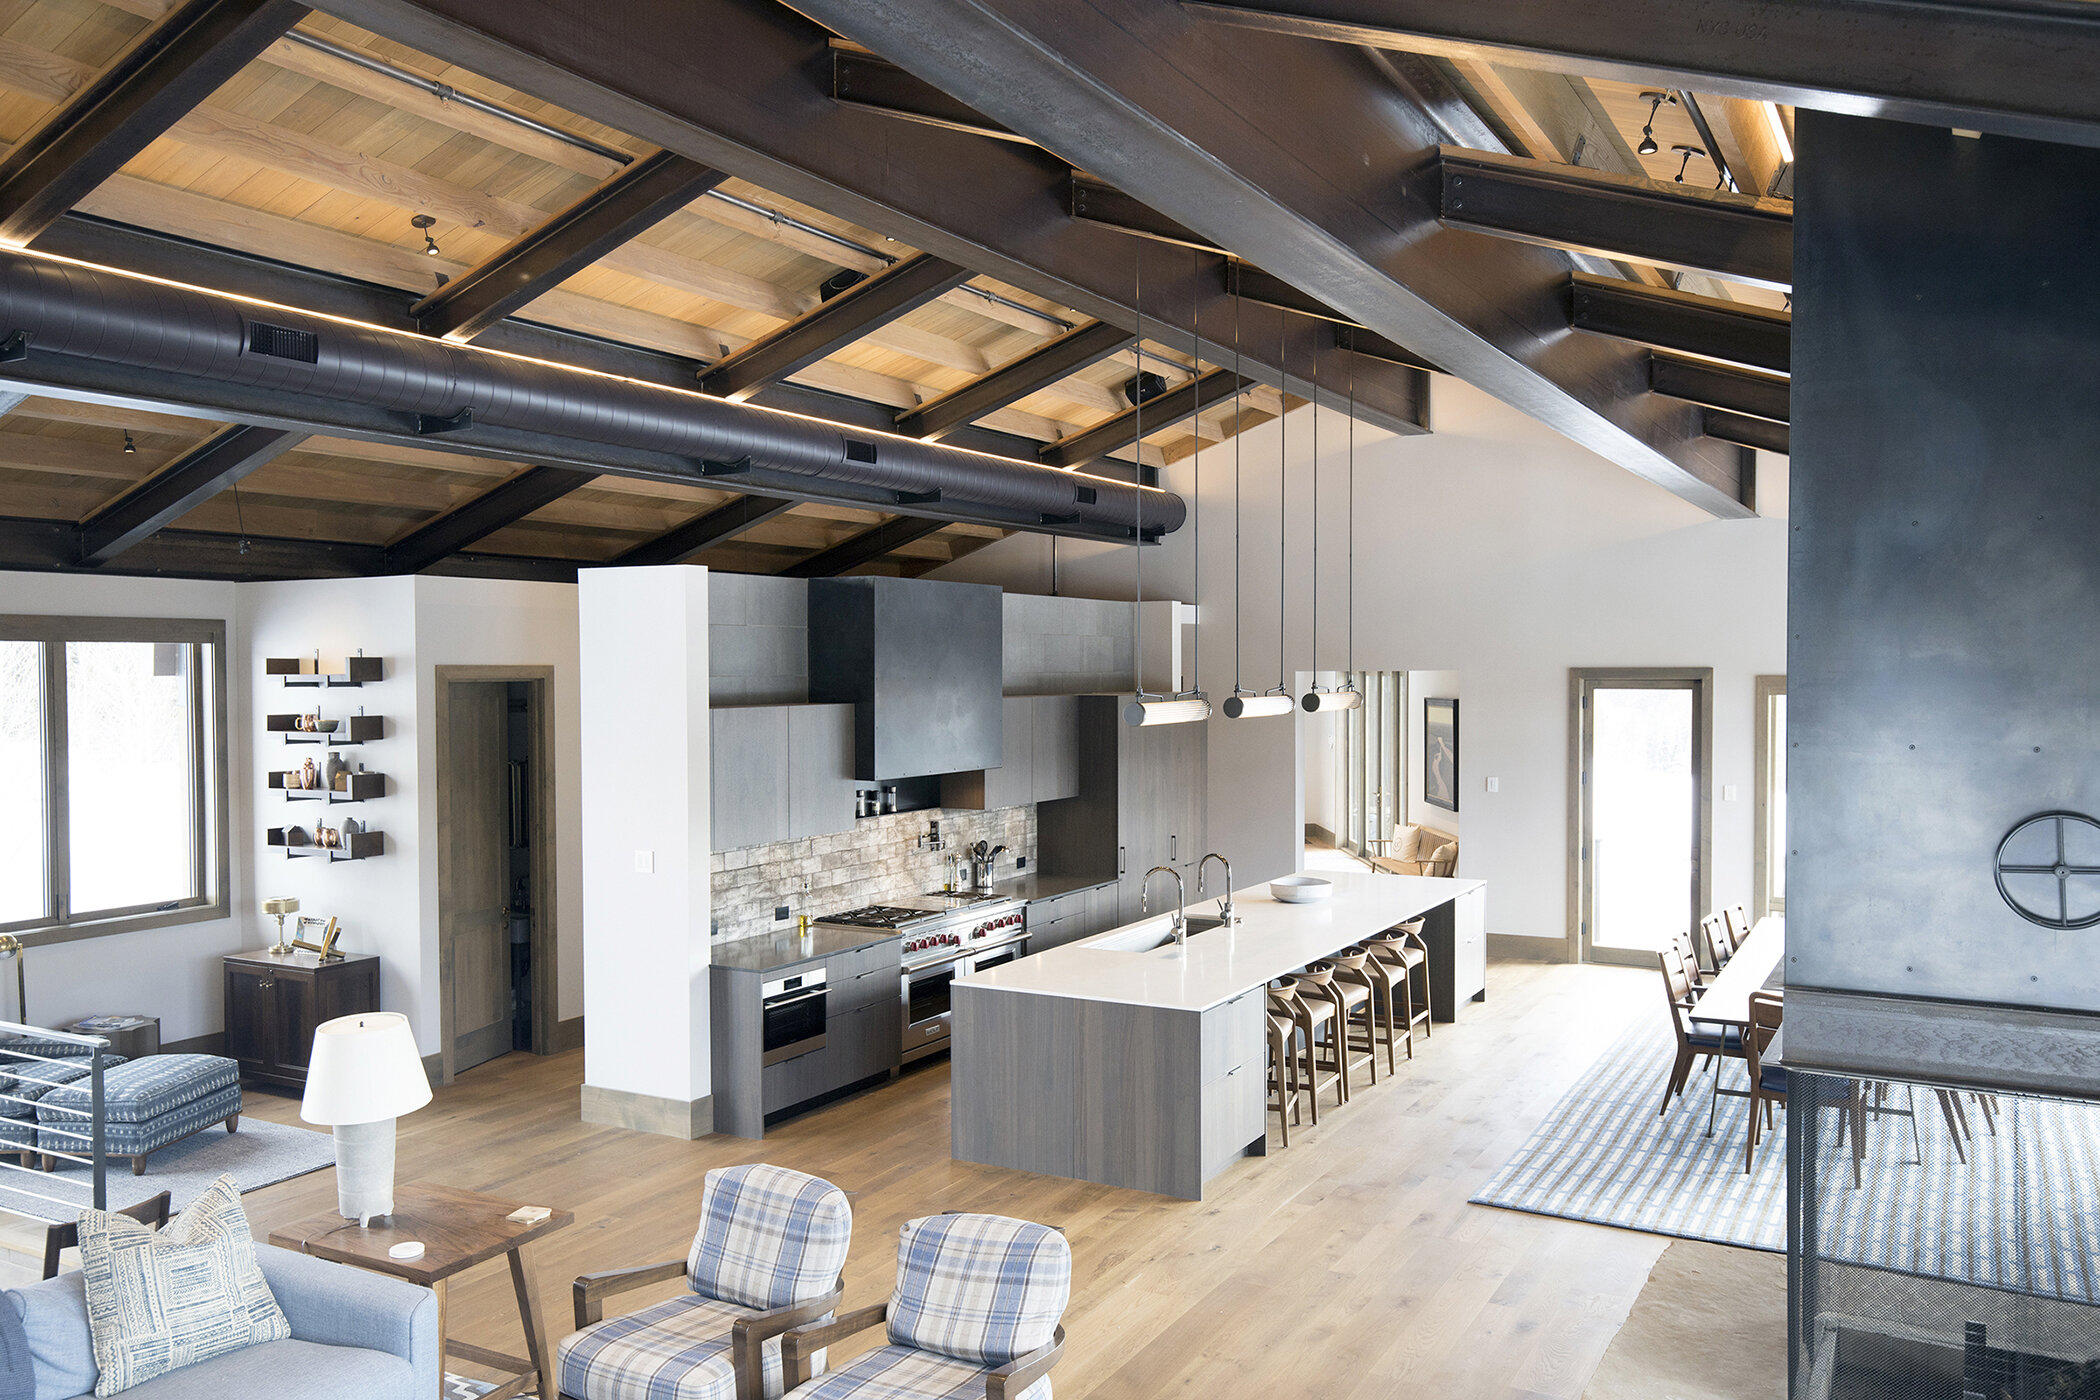 Bozeman_architect_big_sky_custom_home_plank_road_kitchen_dining_room.jpg